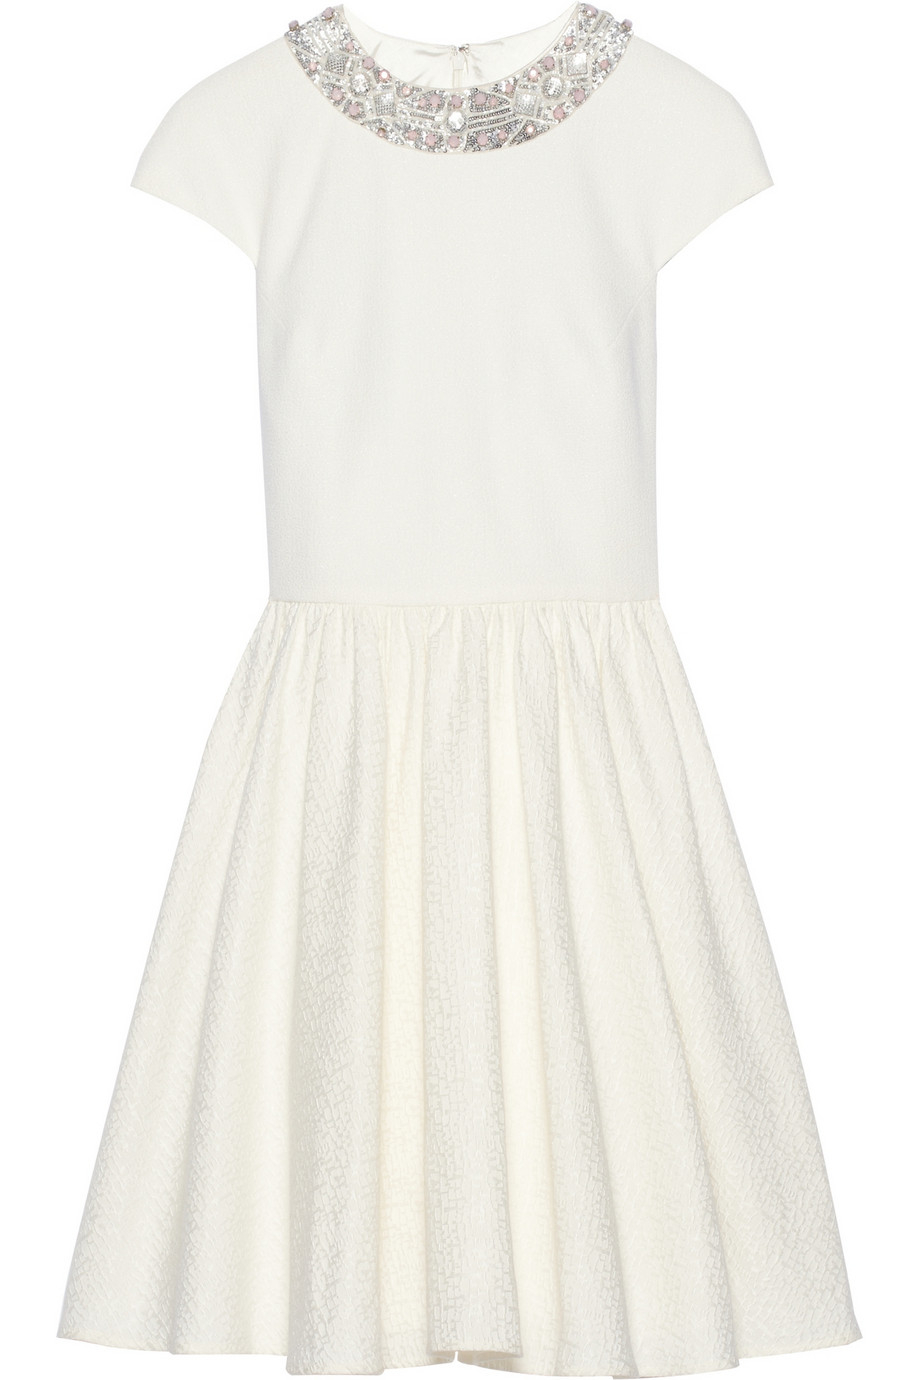 Badgley Mischka Embellished Textured-Crepe Dress in White - Lyst